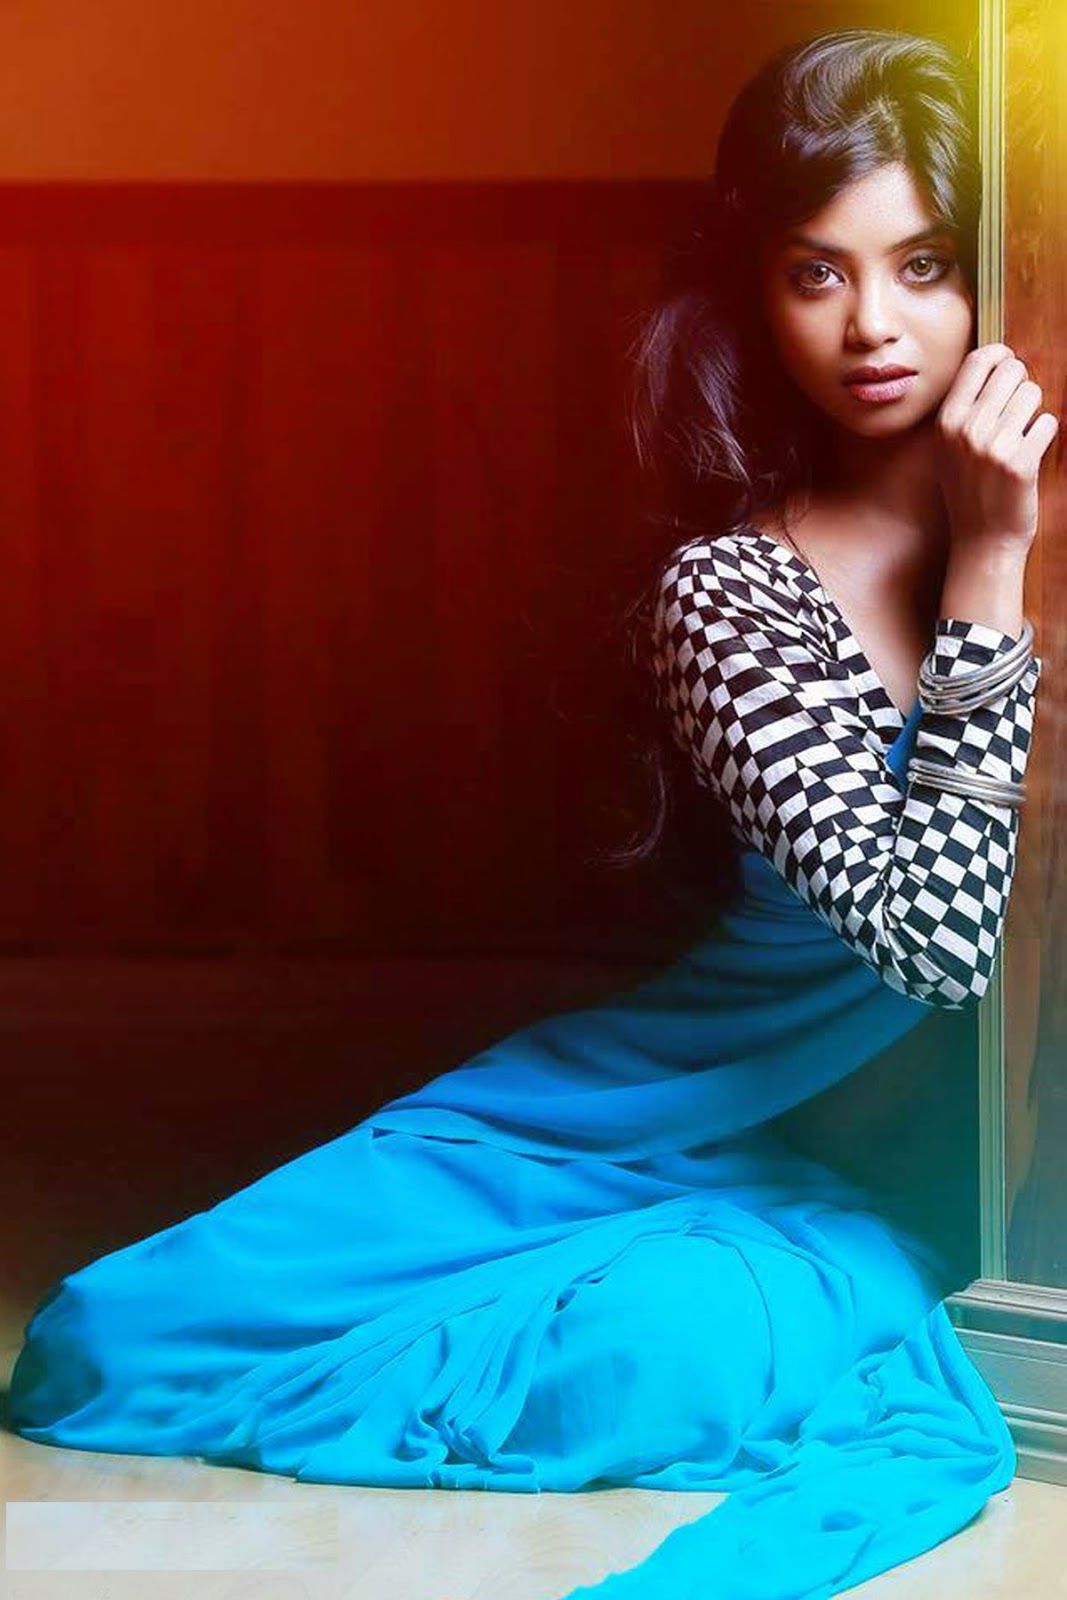 Indian Movie Express. Entertainment Has No Limits!!: Shaun Romy Actress Model (Kammatti Paadam) -Shaun Romy HD Photo